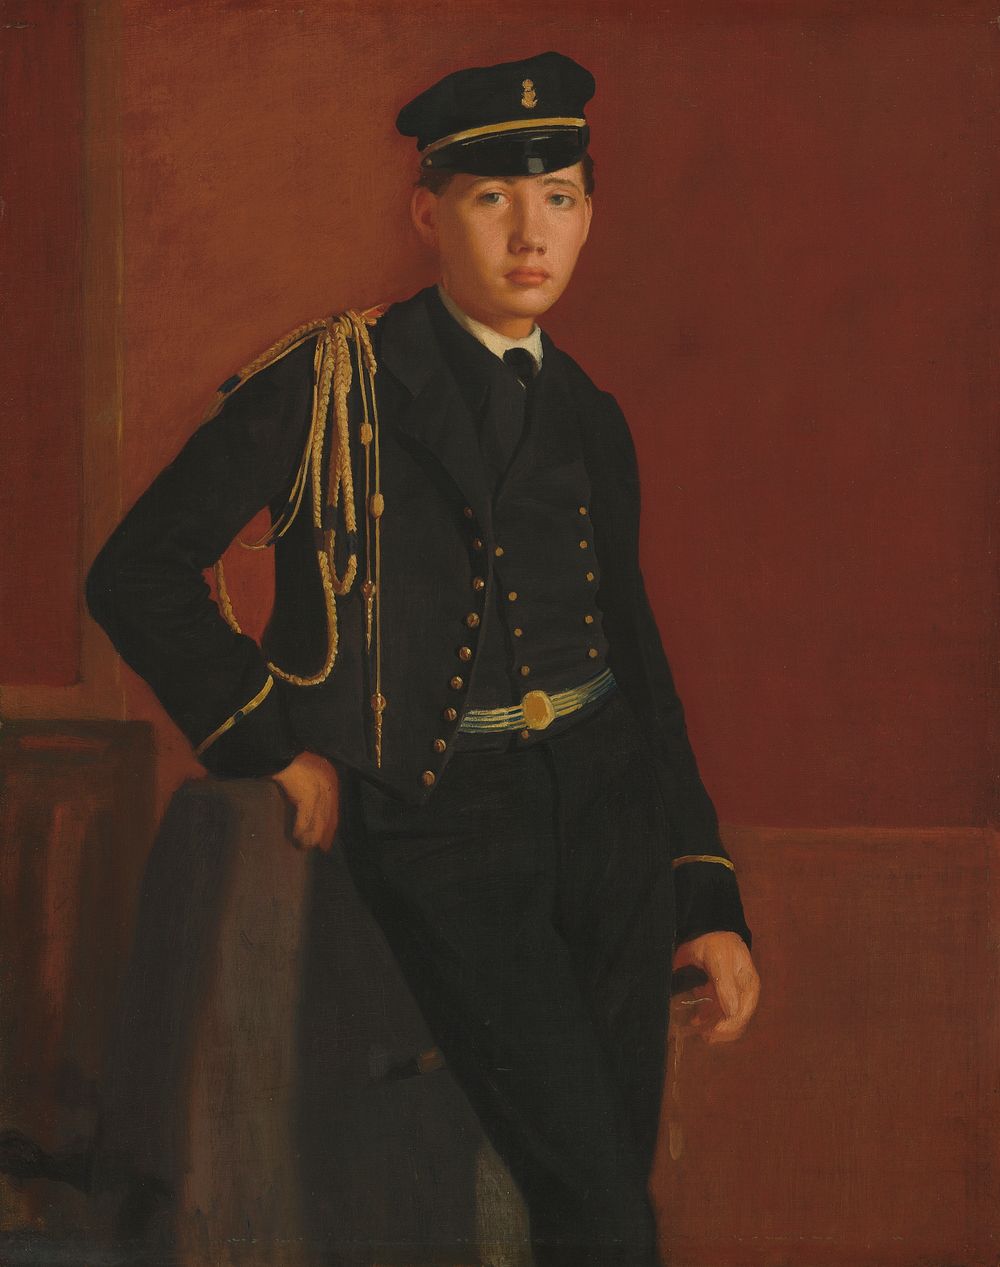 Achille De Gas in the Uniform of a Cadet (1856-1857) by Edgar Degas.